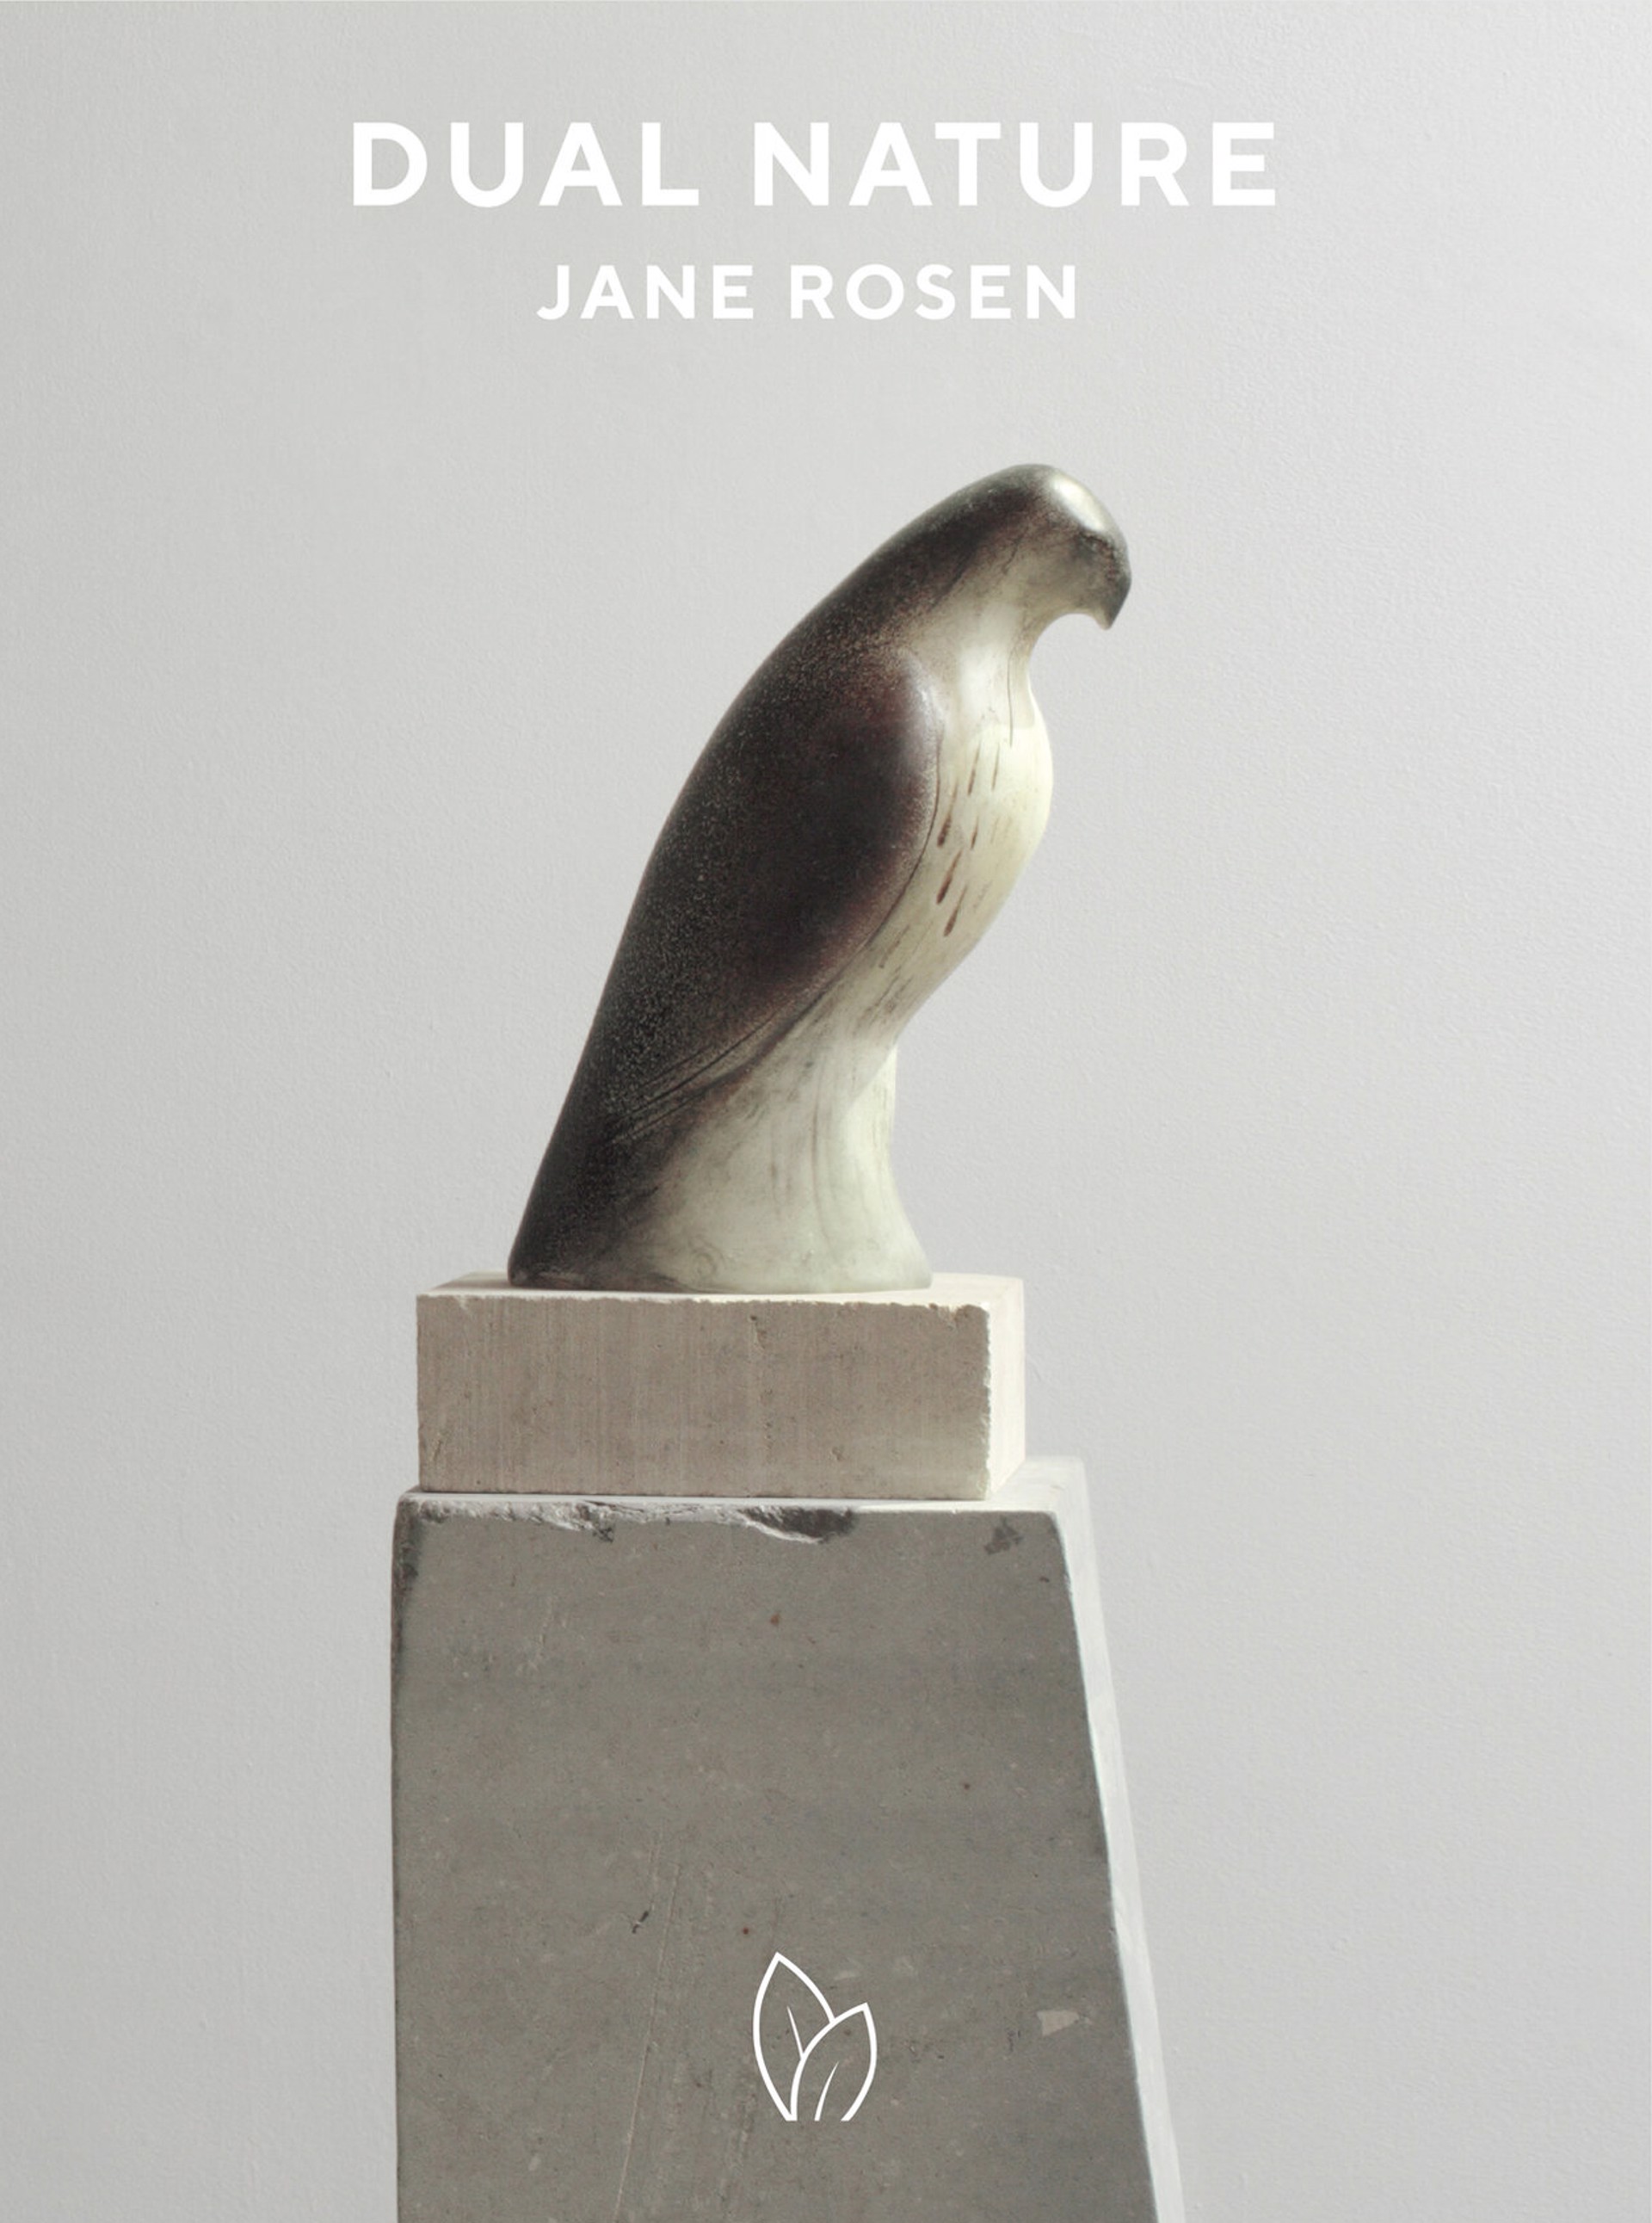 "Dual Nature" by Jane Rosen